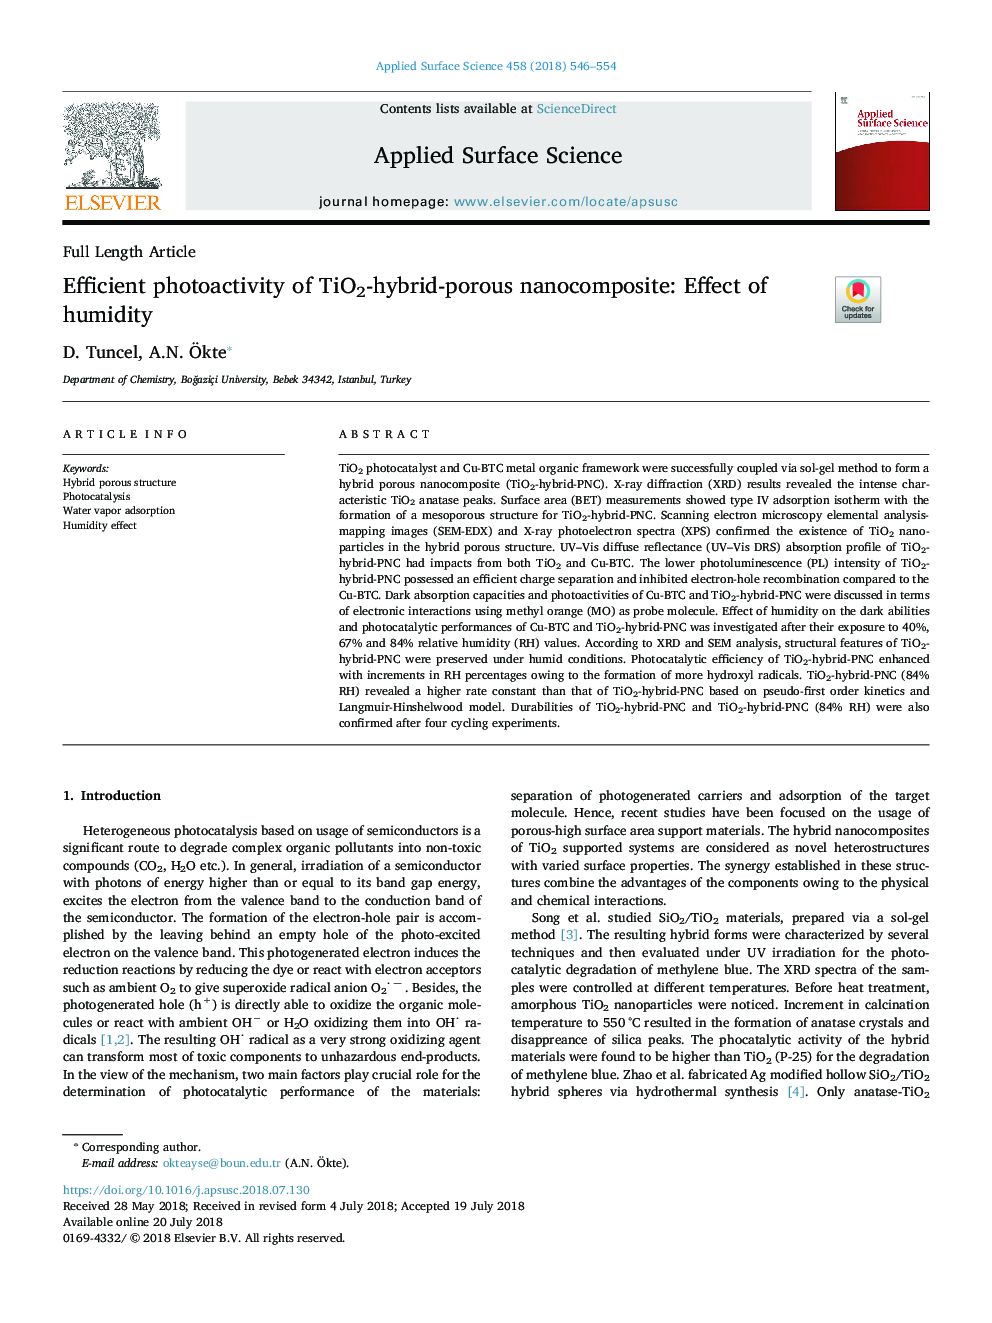 Efficient photoactivity of TiO2-hybrid-porous nanocomposite: Effect of humidity